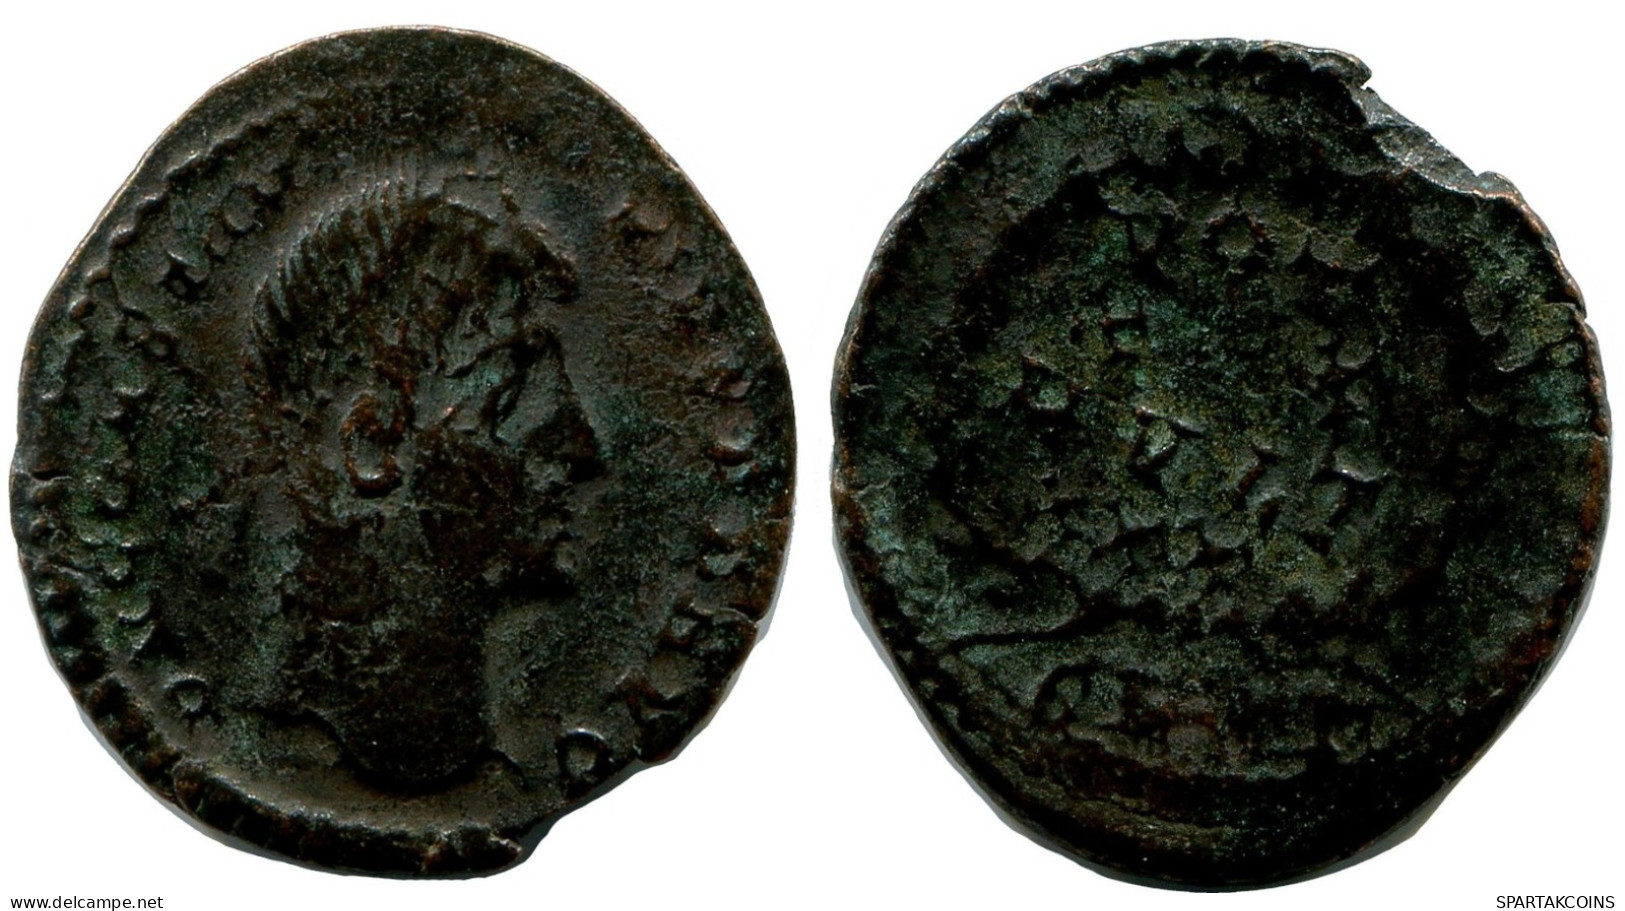 CONSTANTIUS II ALEKSANDRIA FROM THE ROYAL ONTARIO MUSEUM #ANC10229.14.F.A - El Impero Christiano (307 / 363)